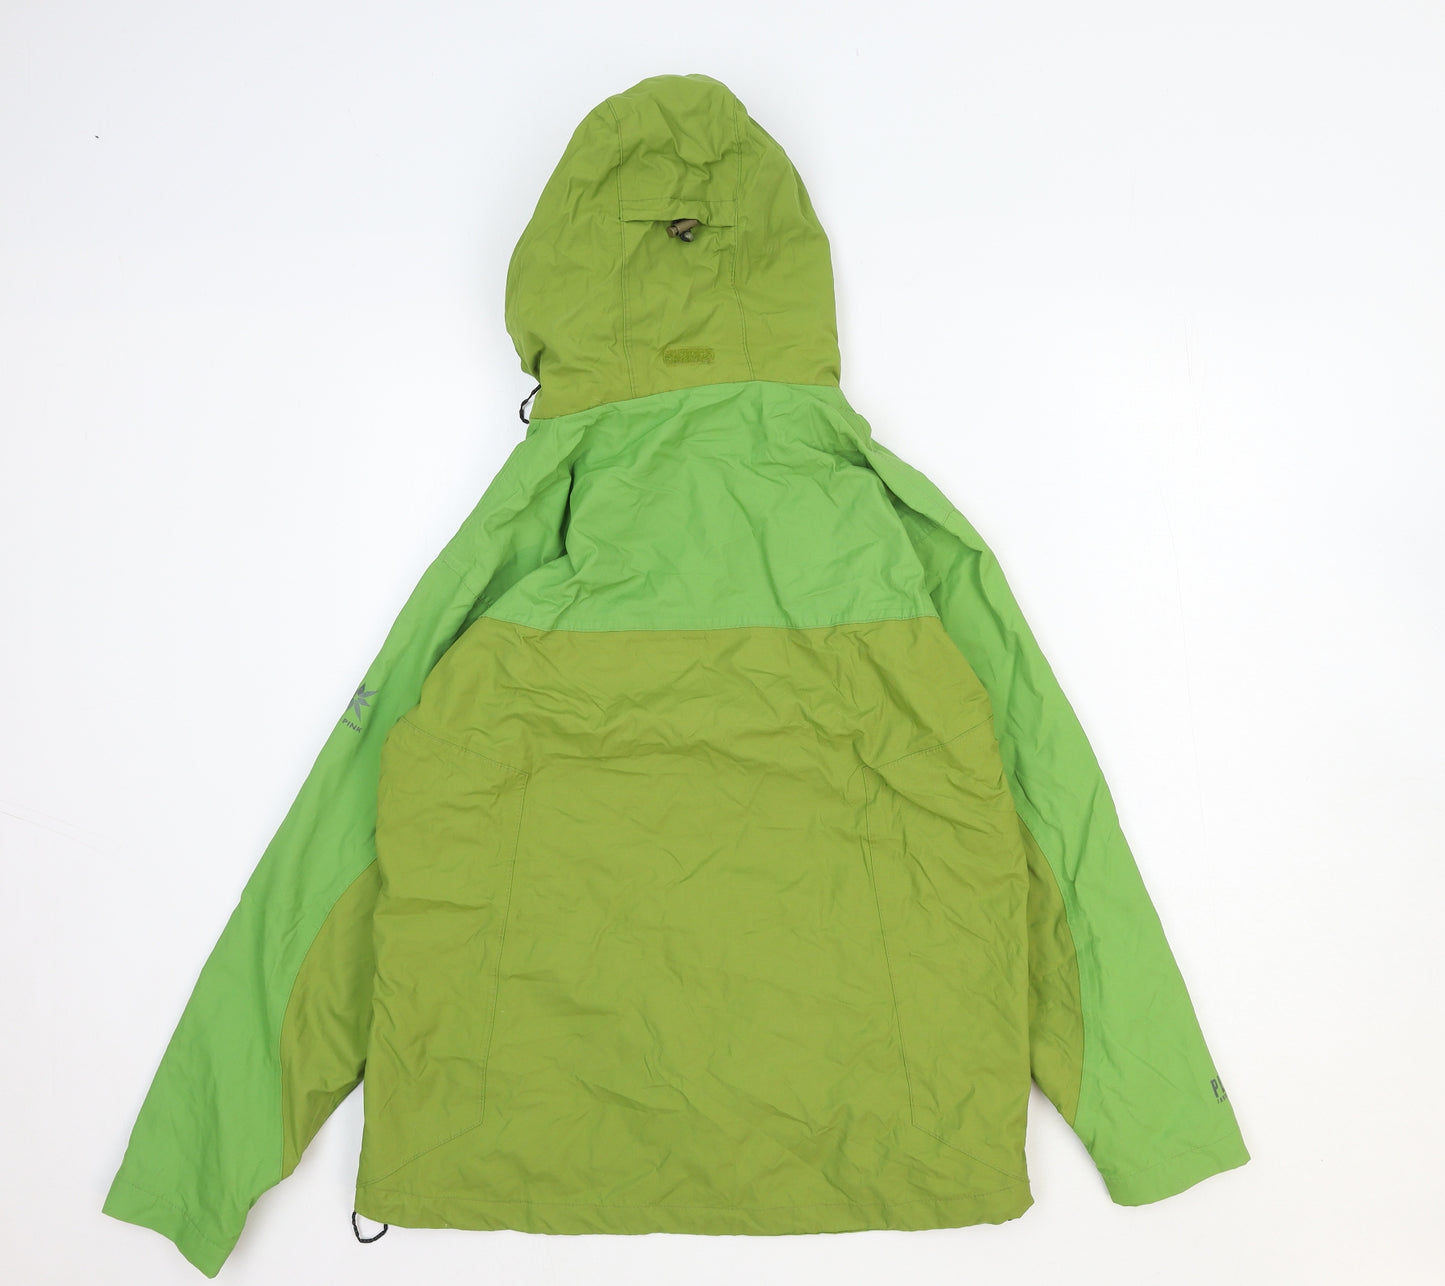 KOKO Girls Green Windbreaker Jacket Size 13 Years Zip